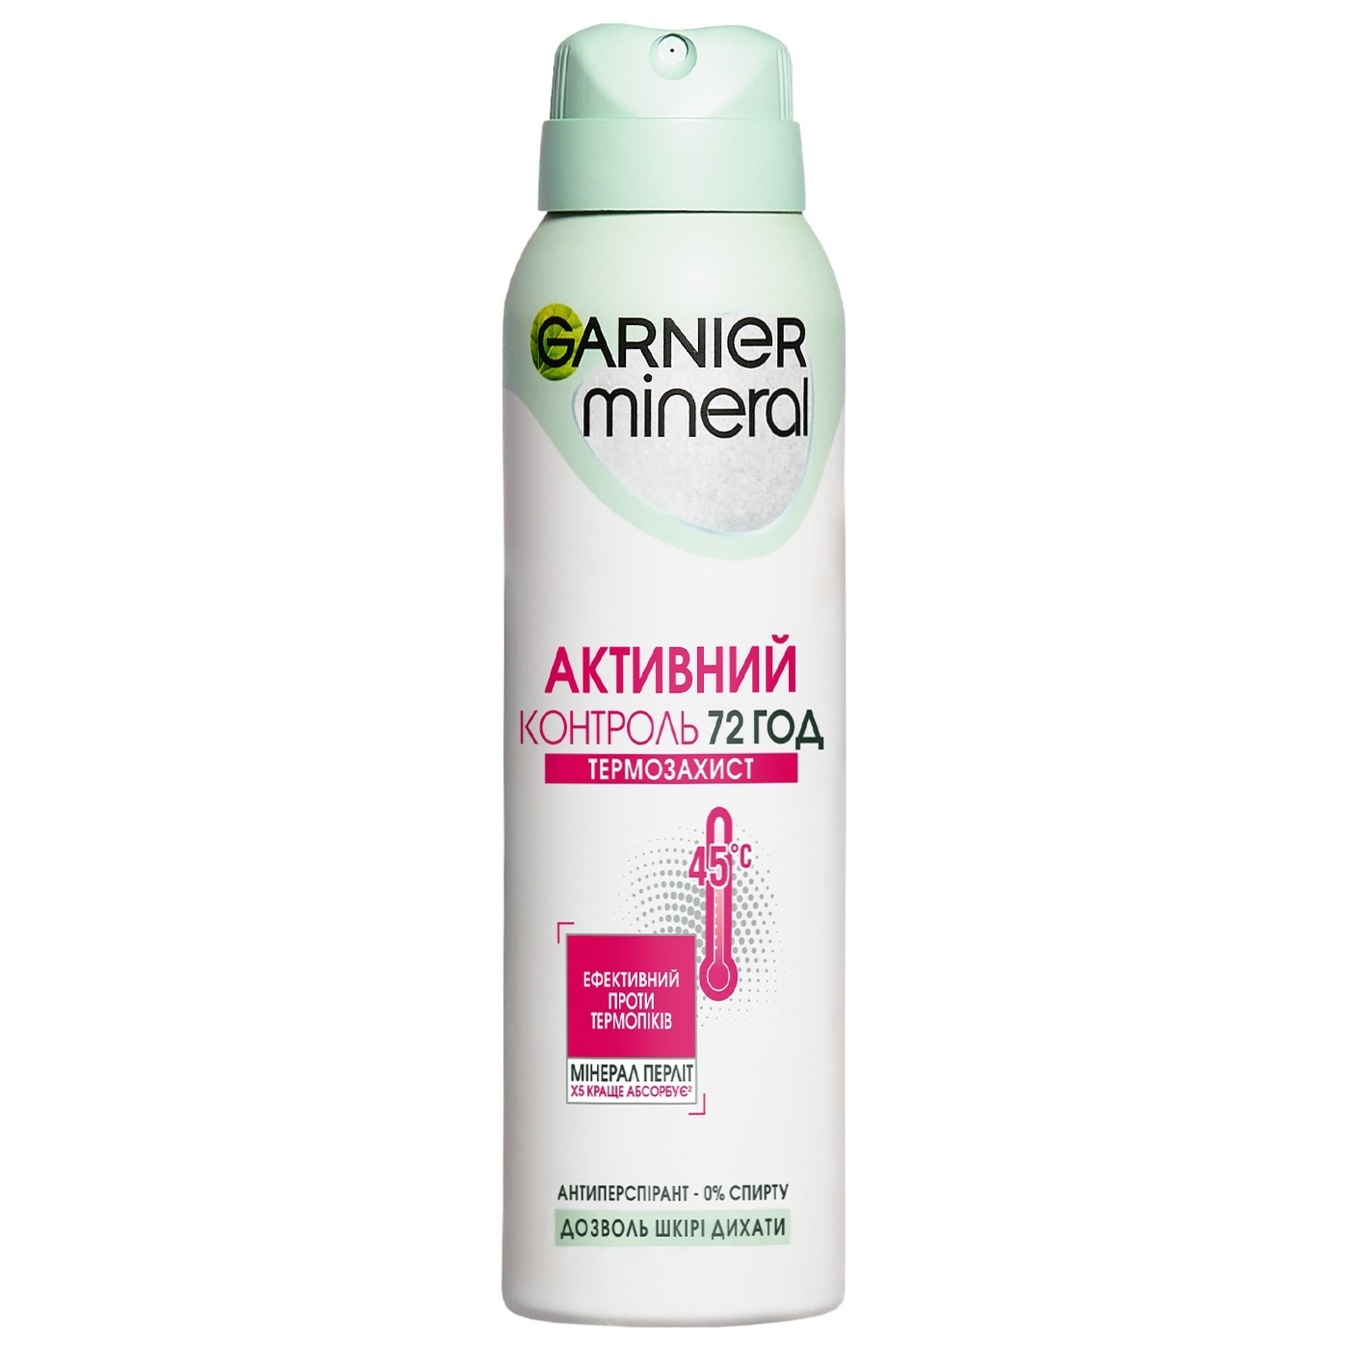 Garnier body deodorant-antiperspirant Active Control Thermal Protection Mineral 150ml